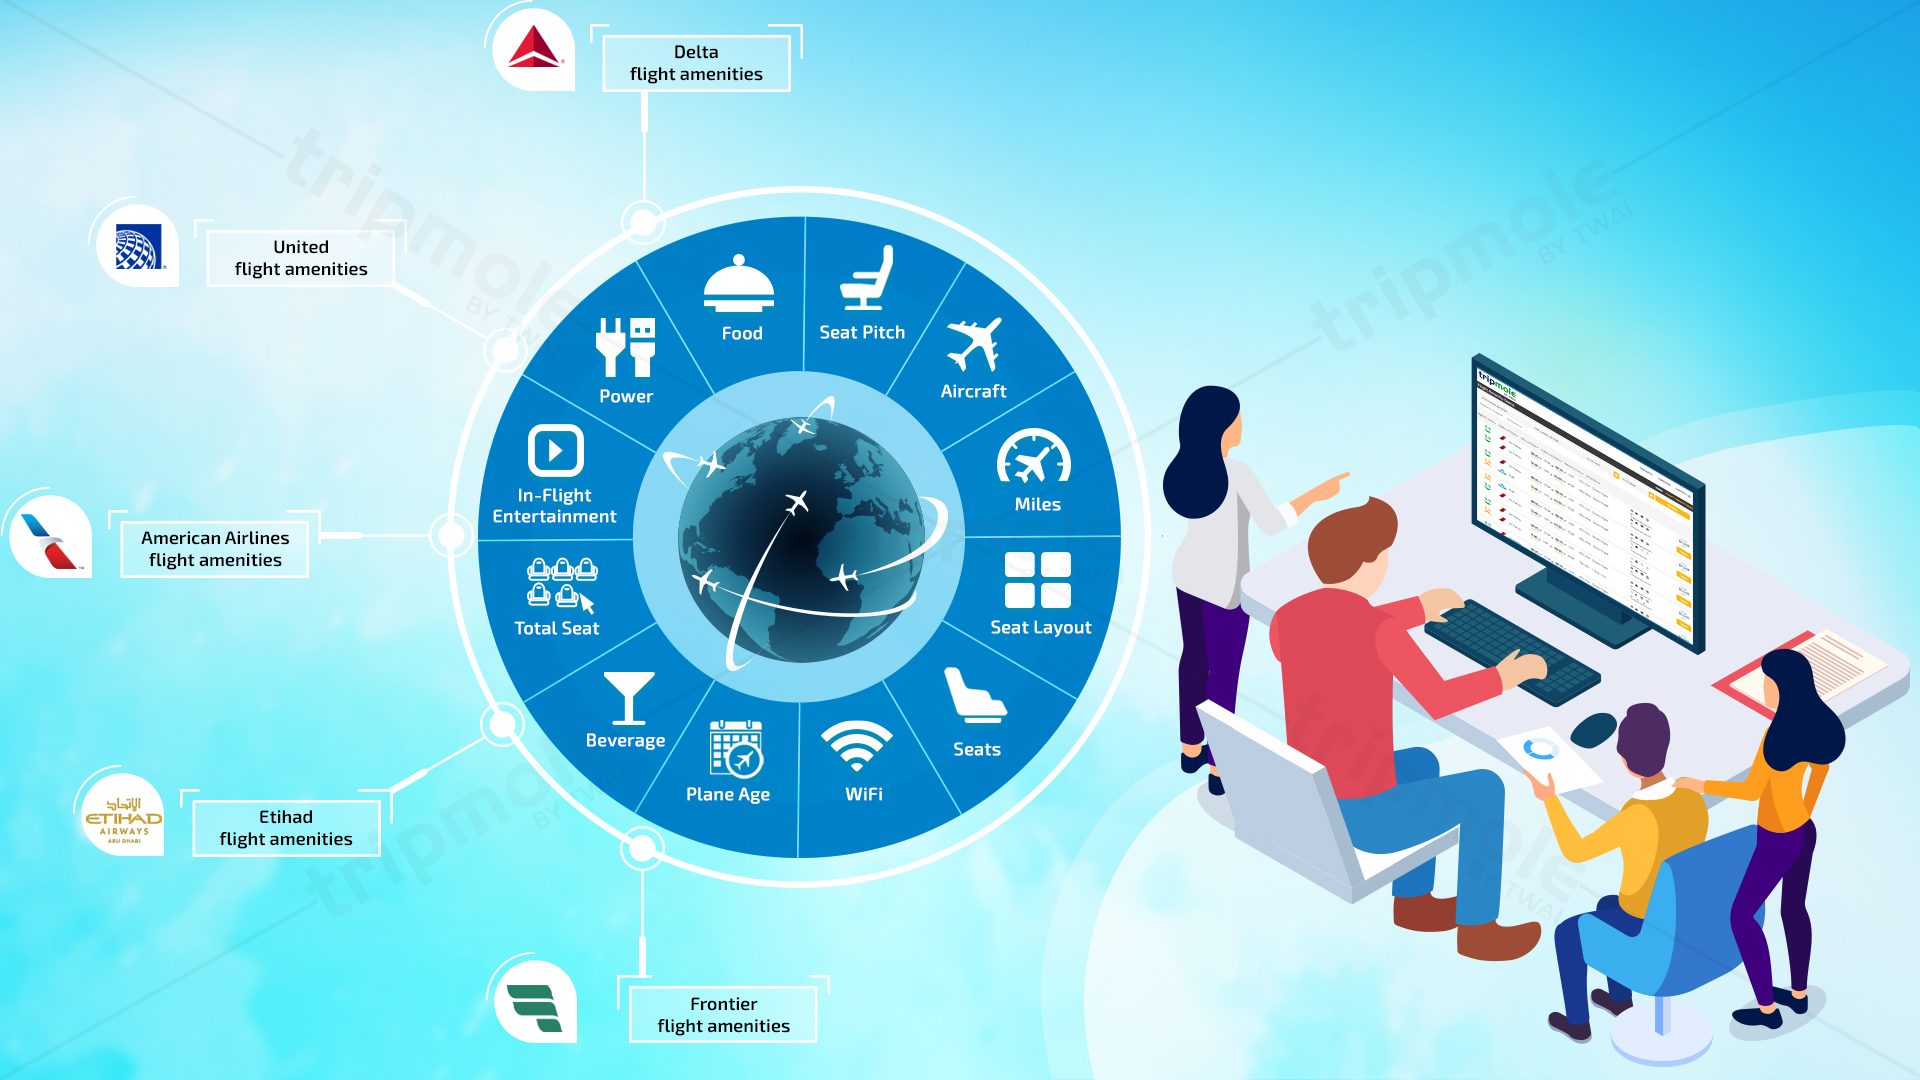 flight amenities data for all major airlines